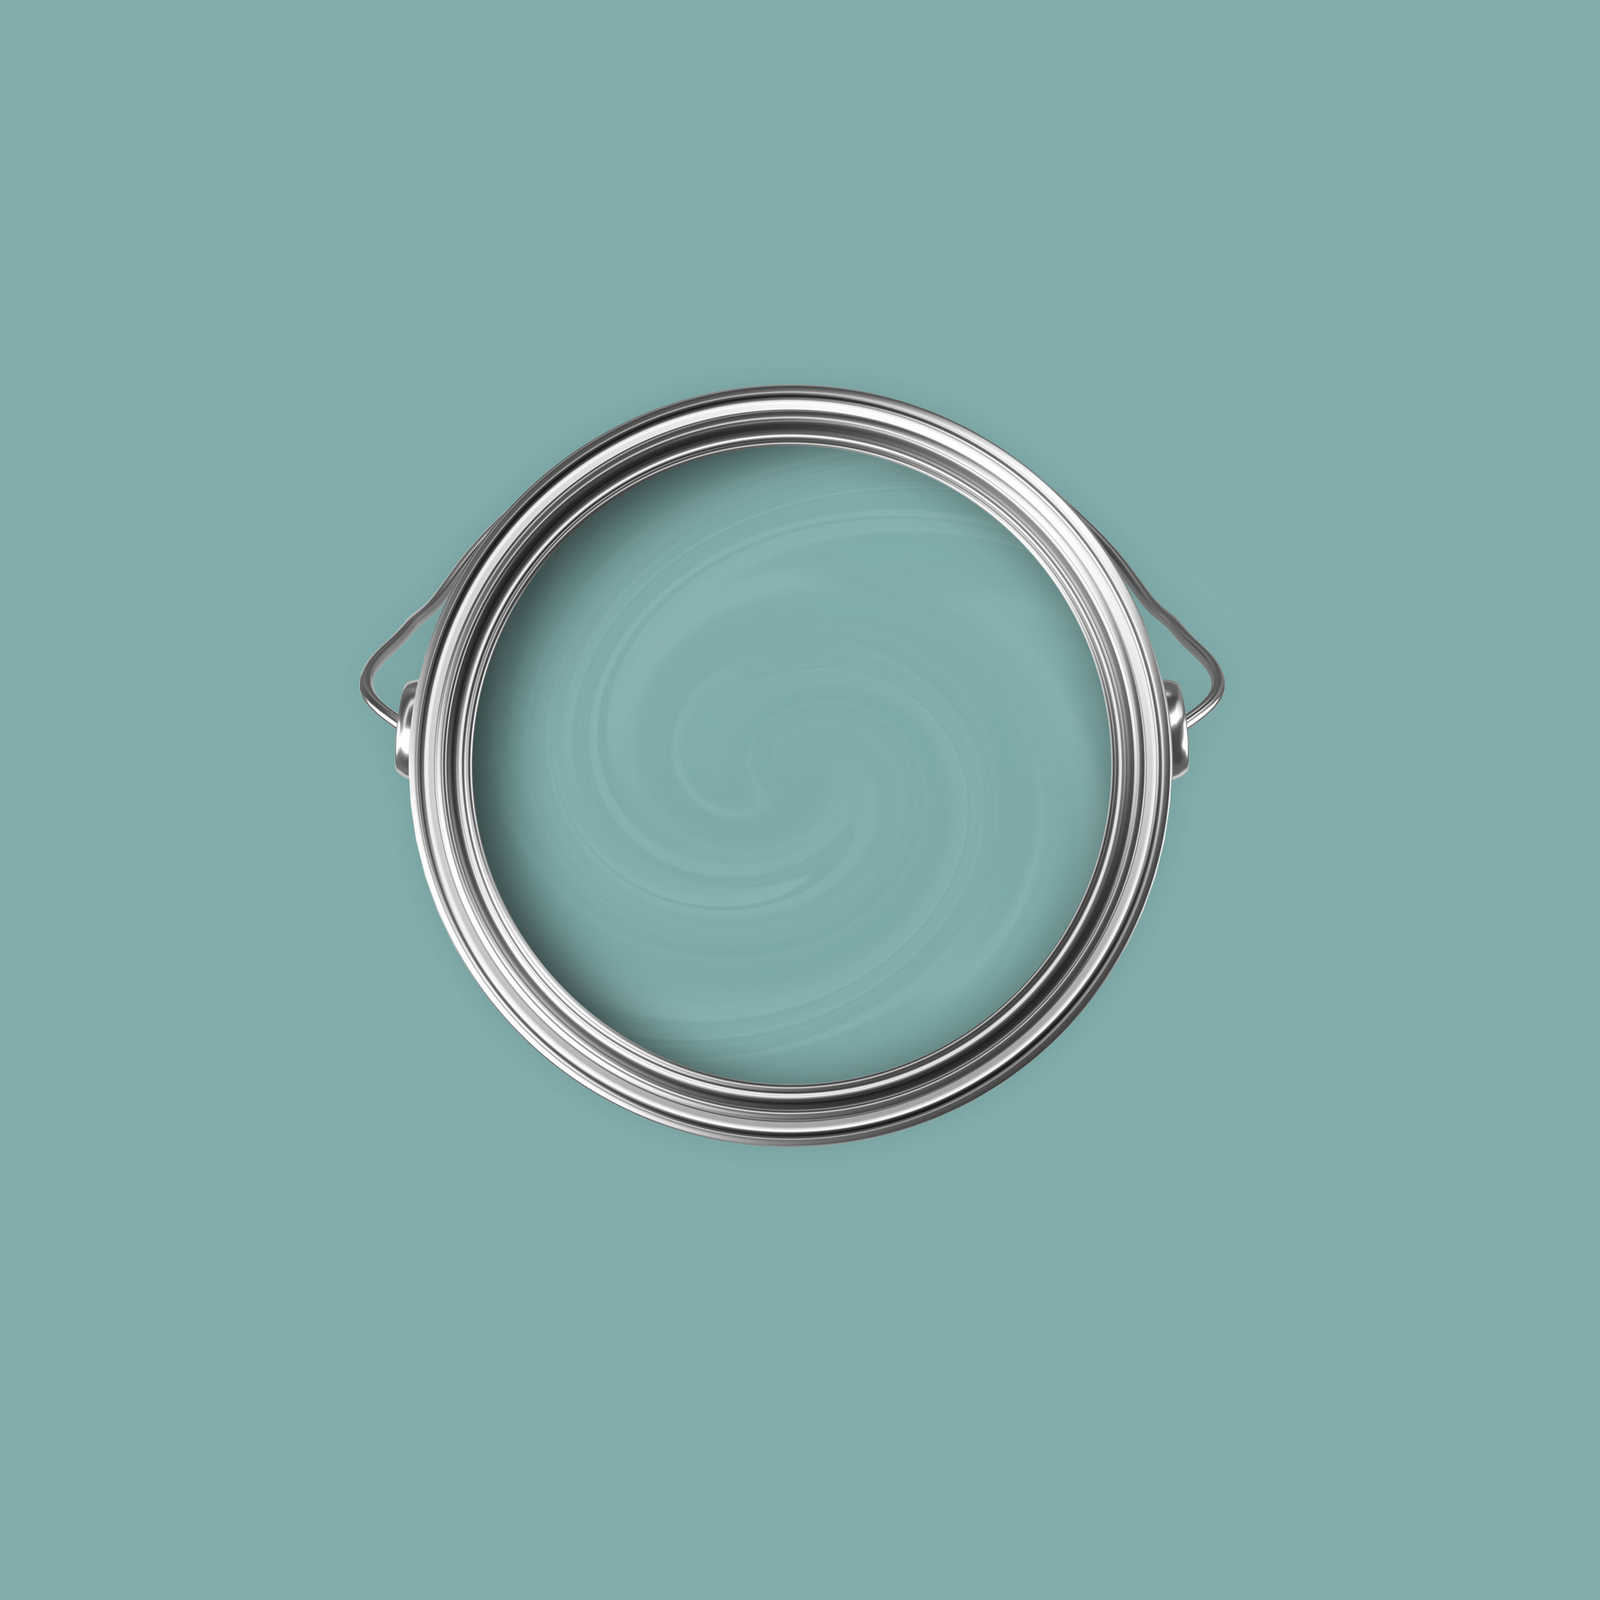             Premium Muurverf Winging Mint »Expressive Emerald« NW408 – 2,5 Liter
        